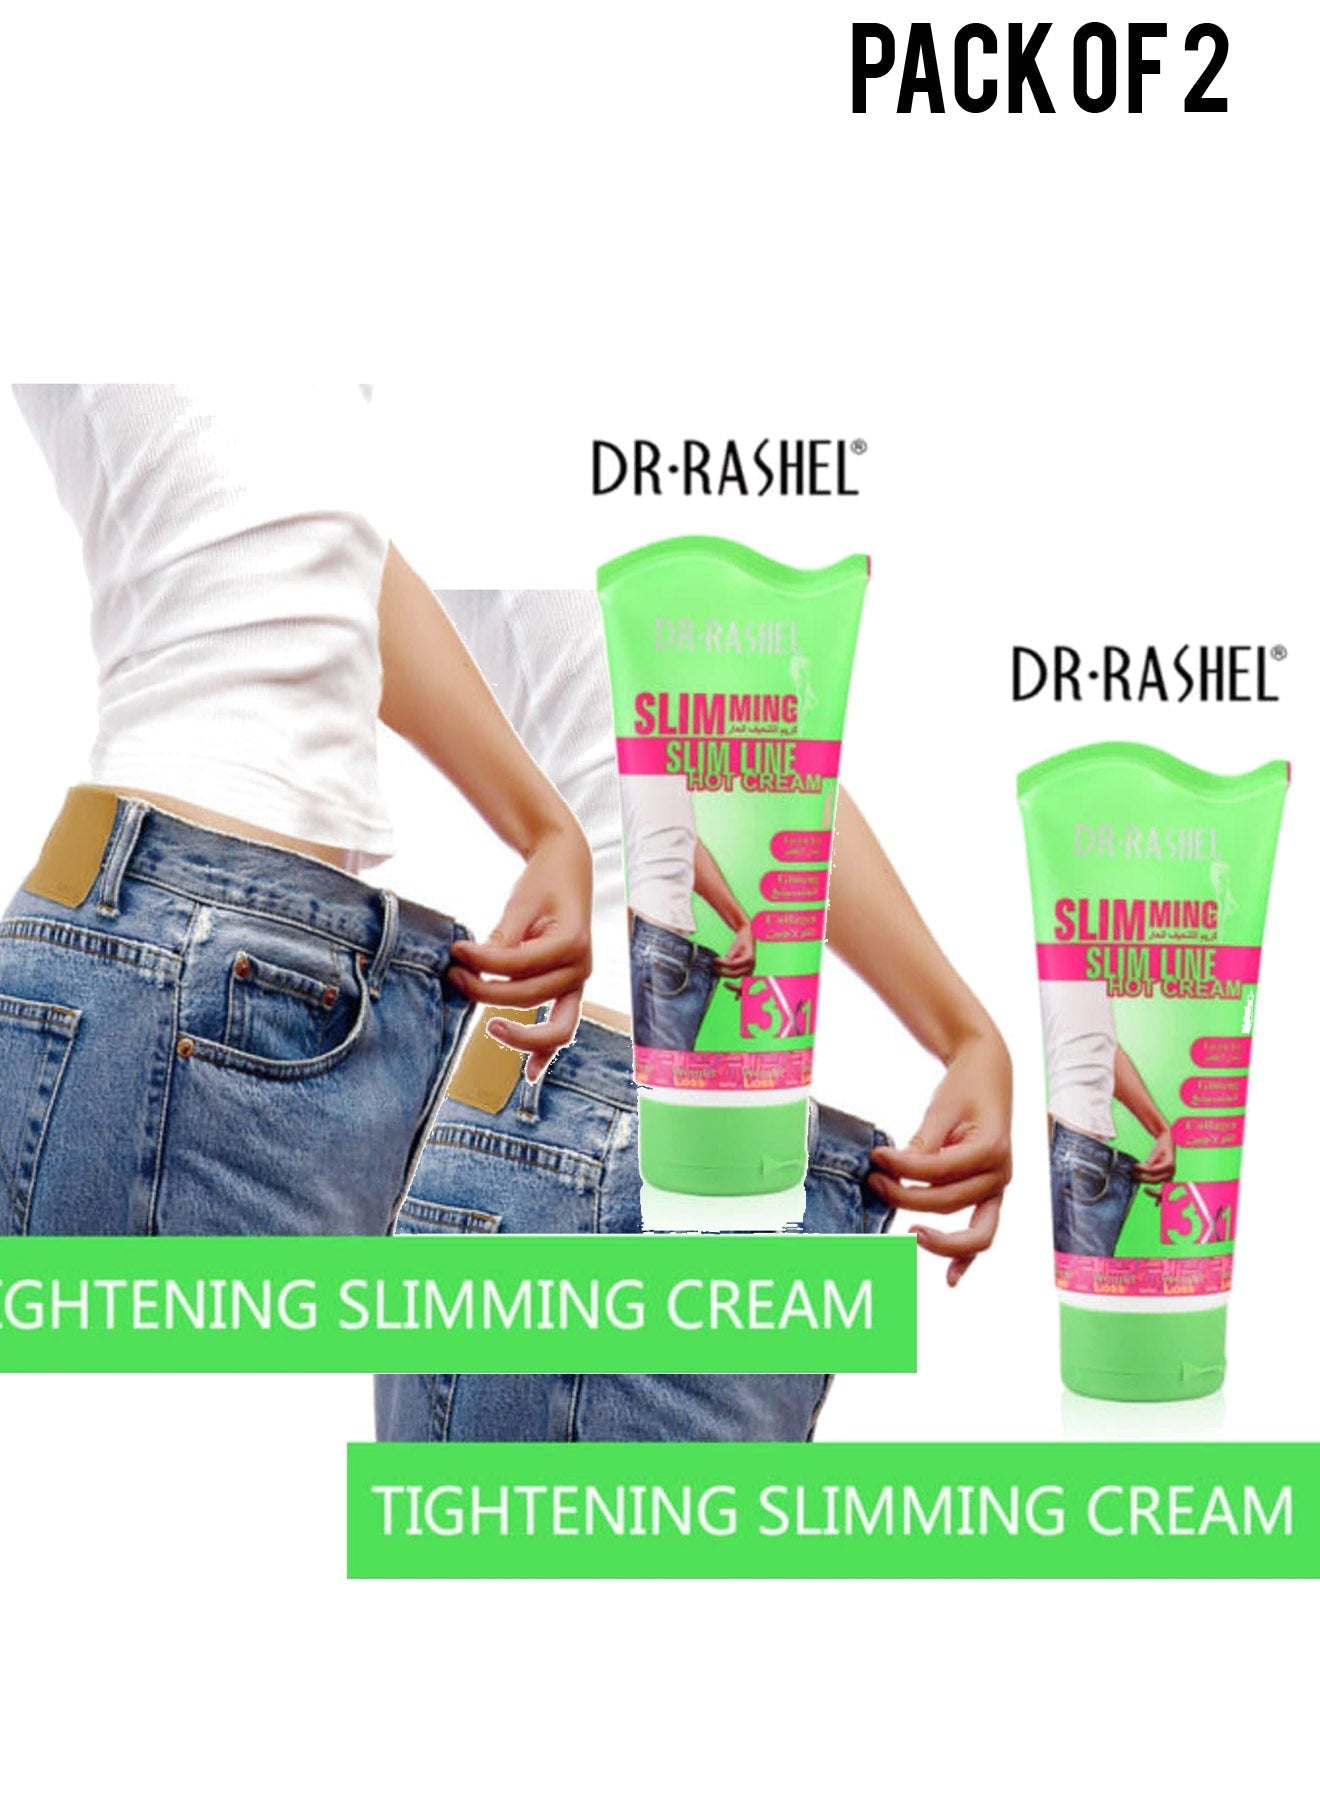 Dr Rashel Collagen lose weight milk Body stomach Hot Slimming Cream 150g Value Pack of 2 